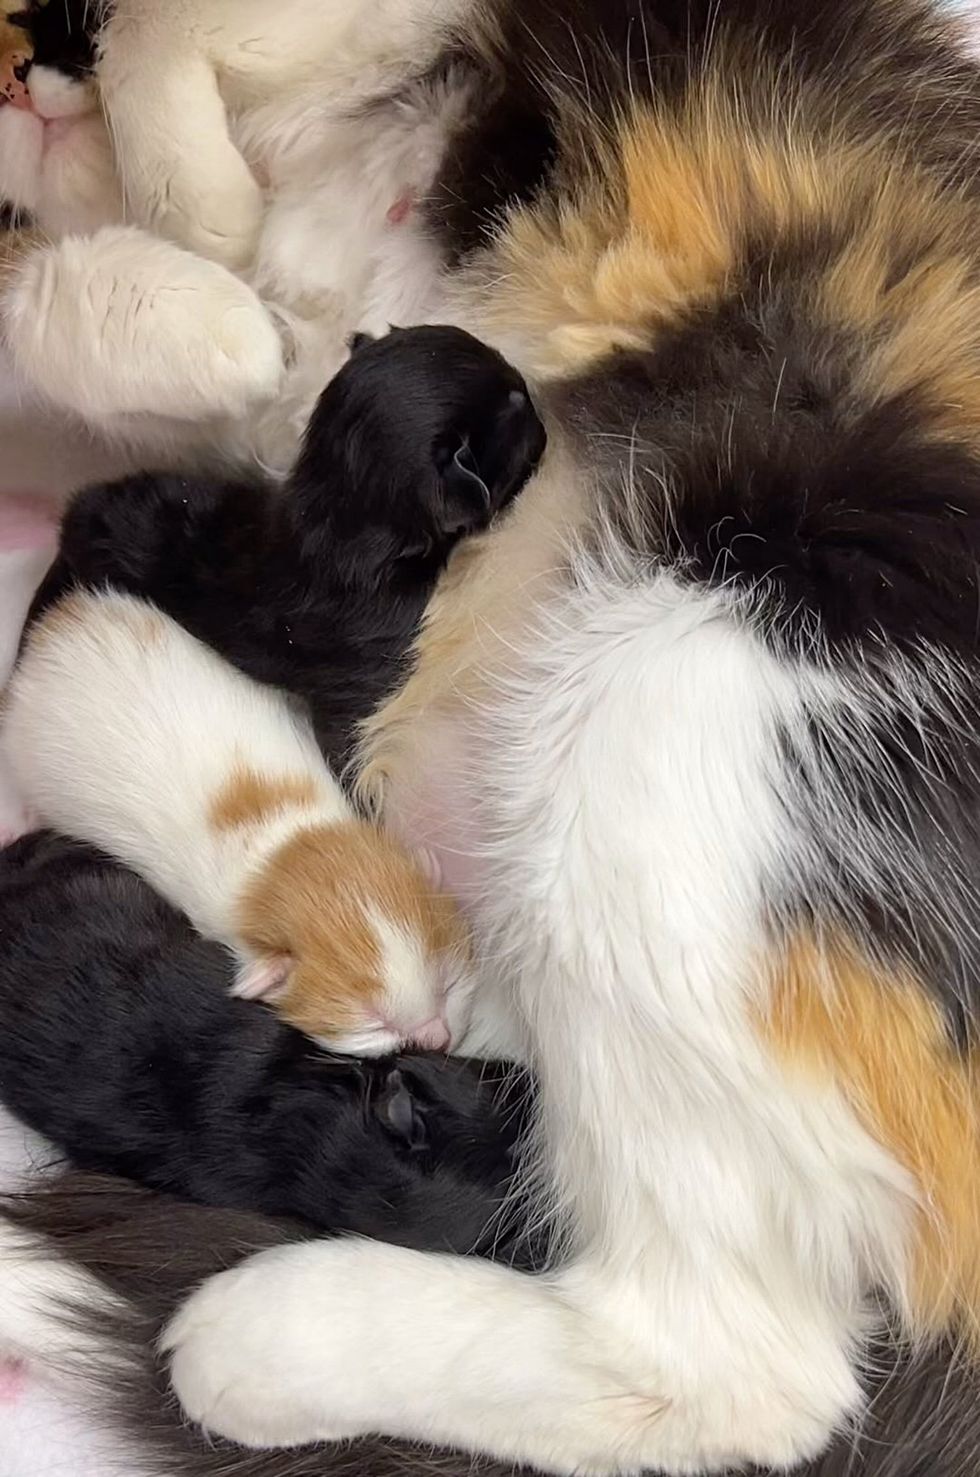 newborn kittens nursing